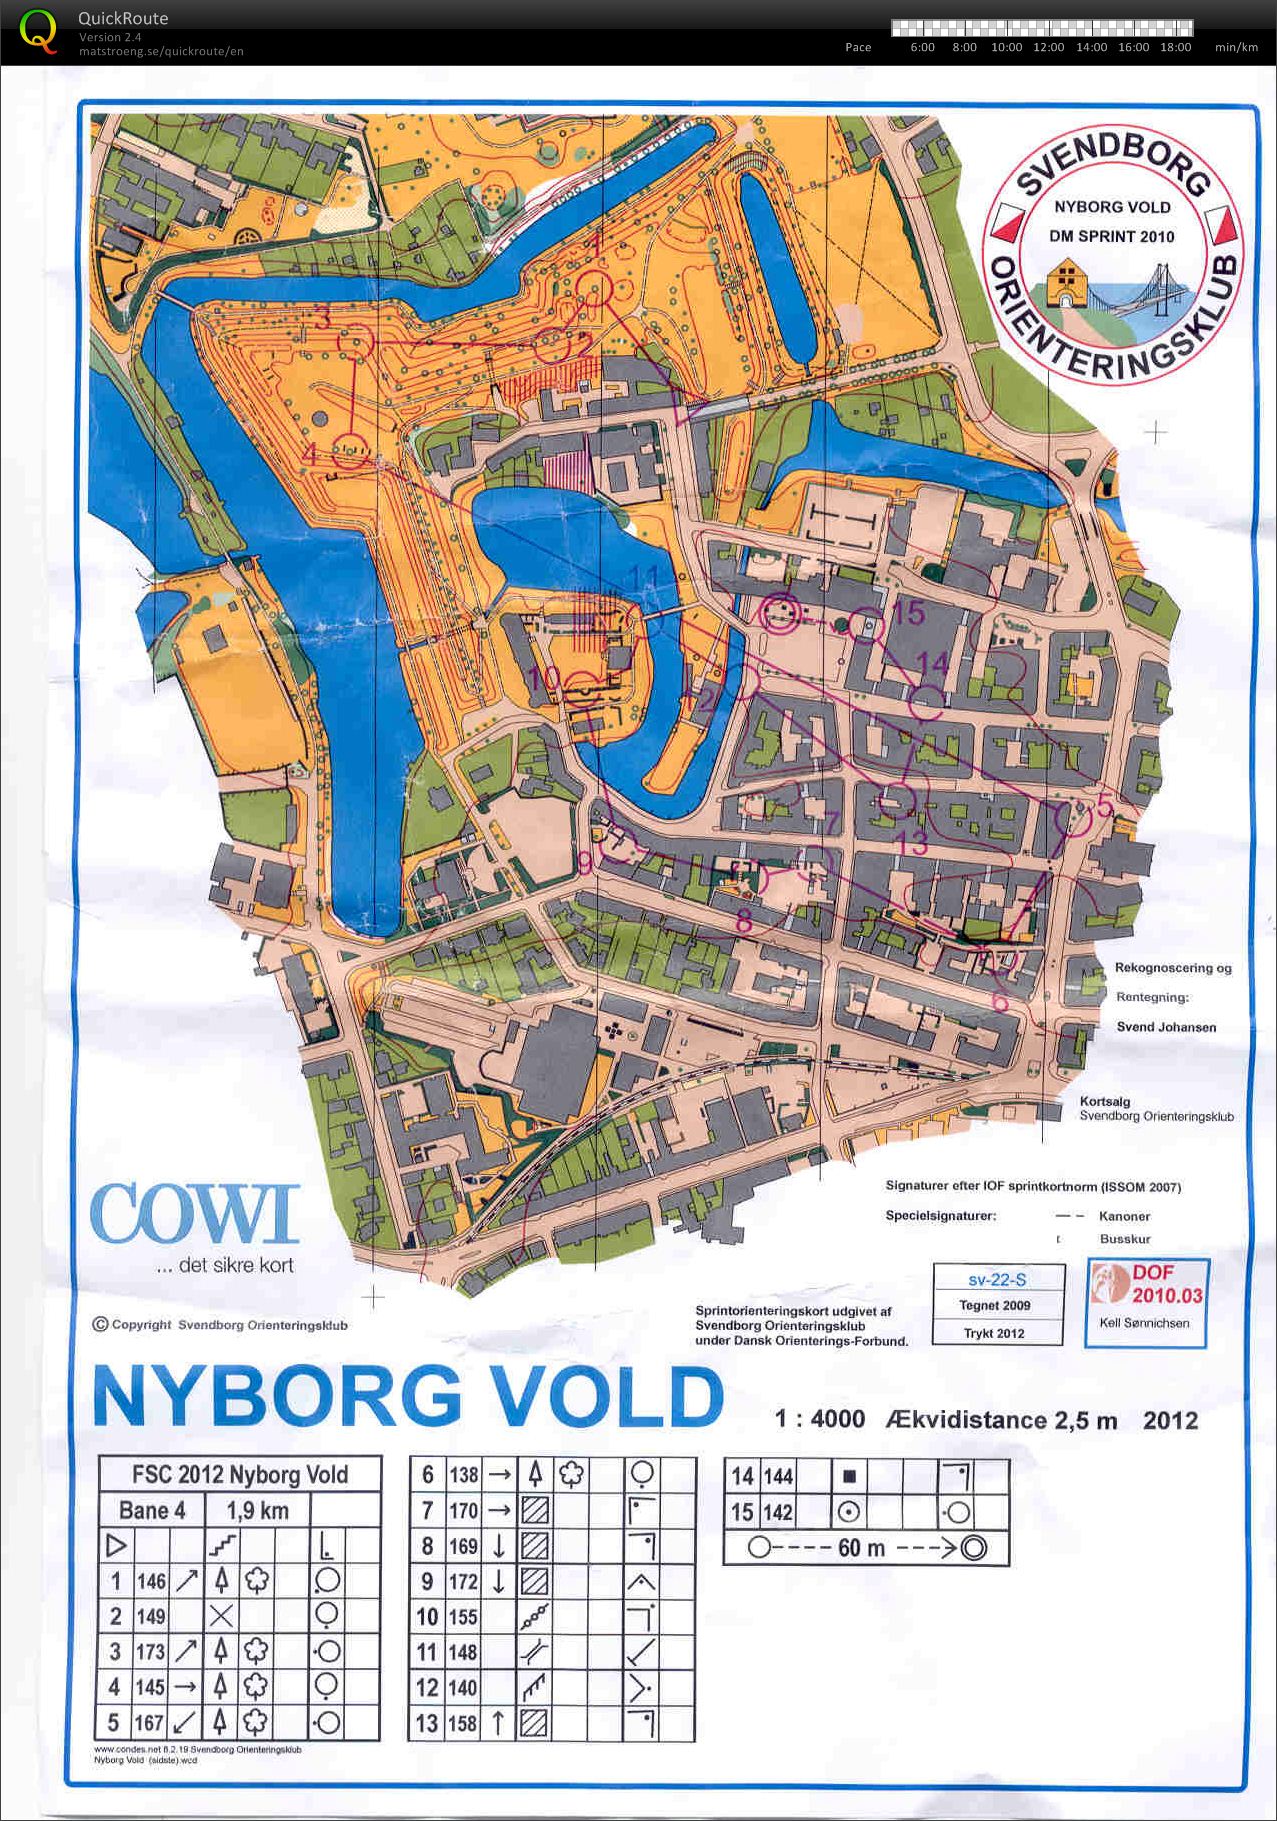 Nyborg Vold, Bane 4, D55, Pia Gade, 280512 (2012-05-28)